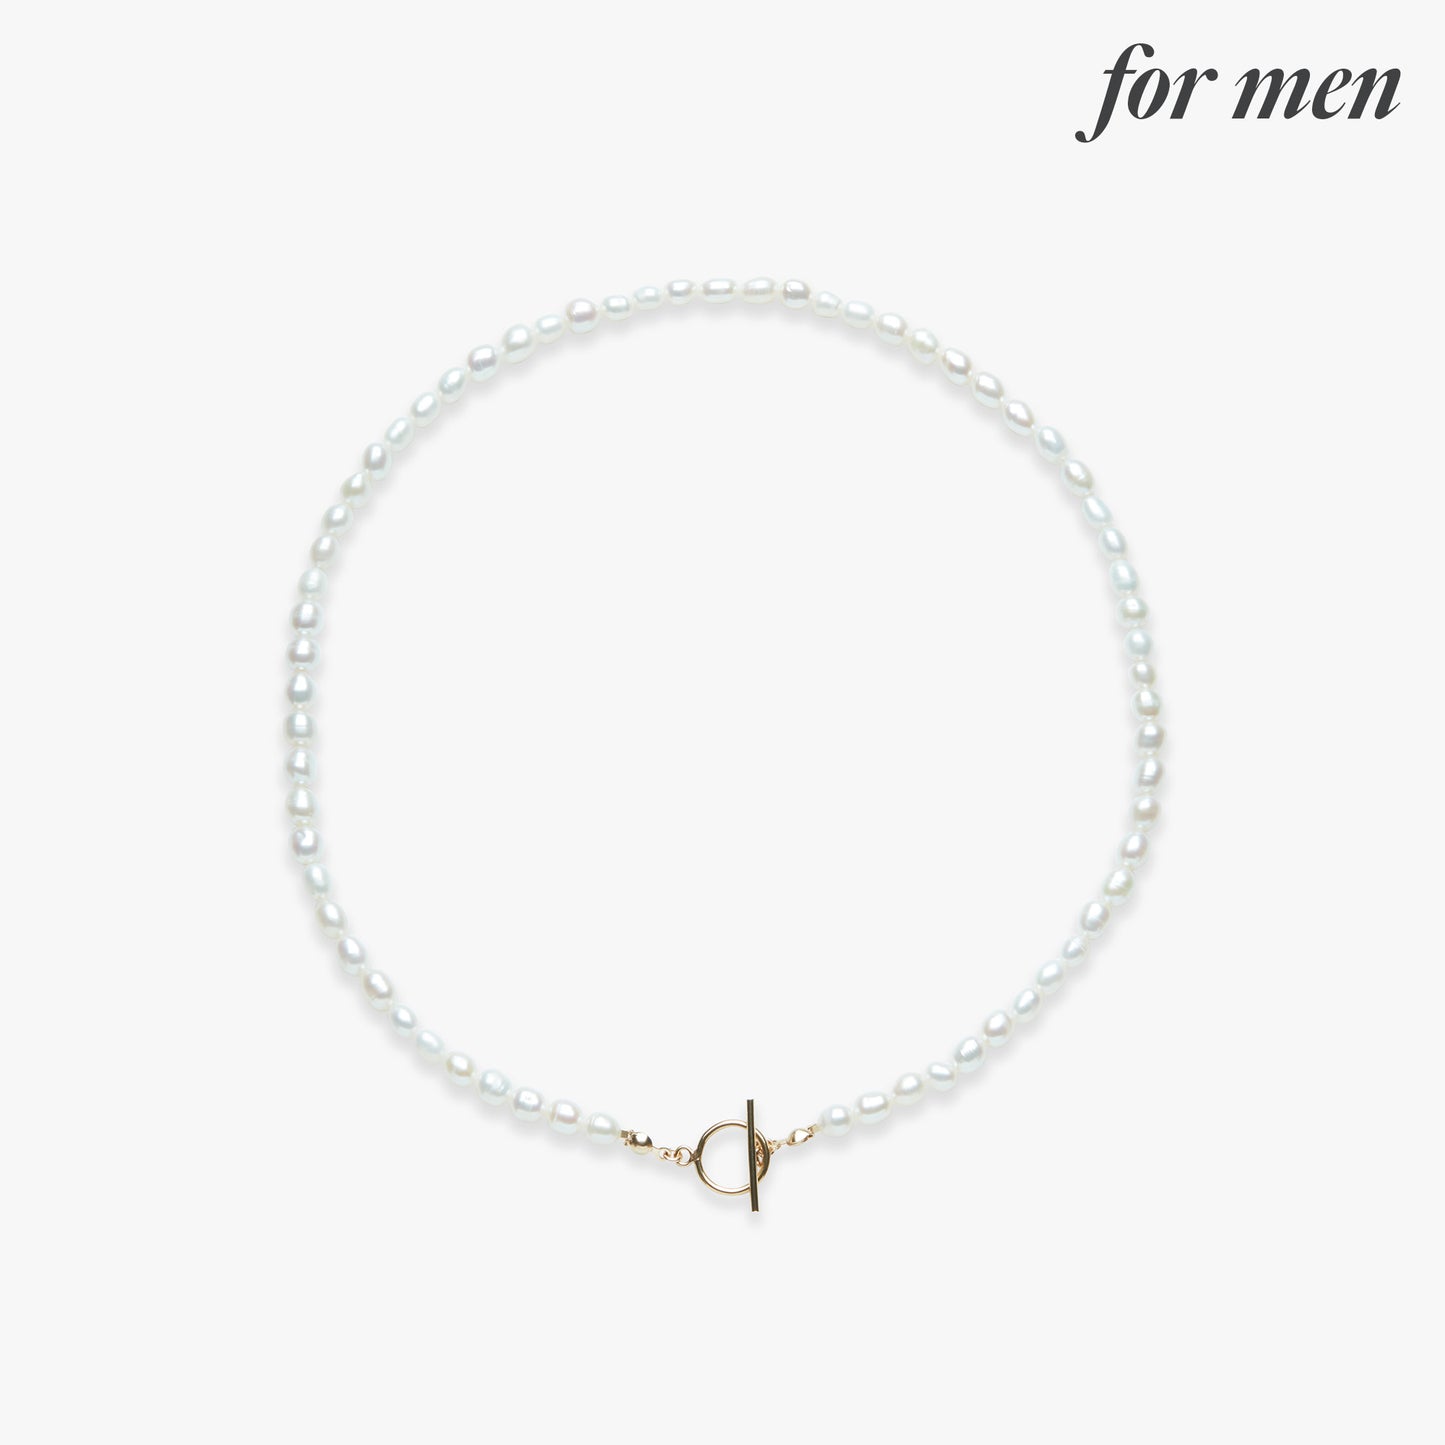 Rêve full medium pearl necklace gold filled for men